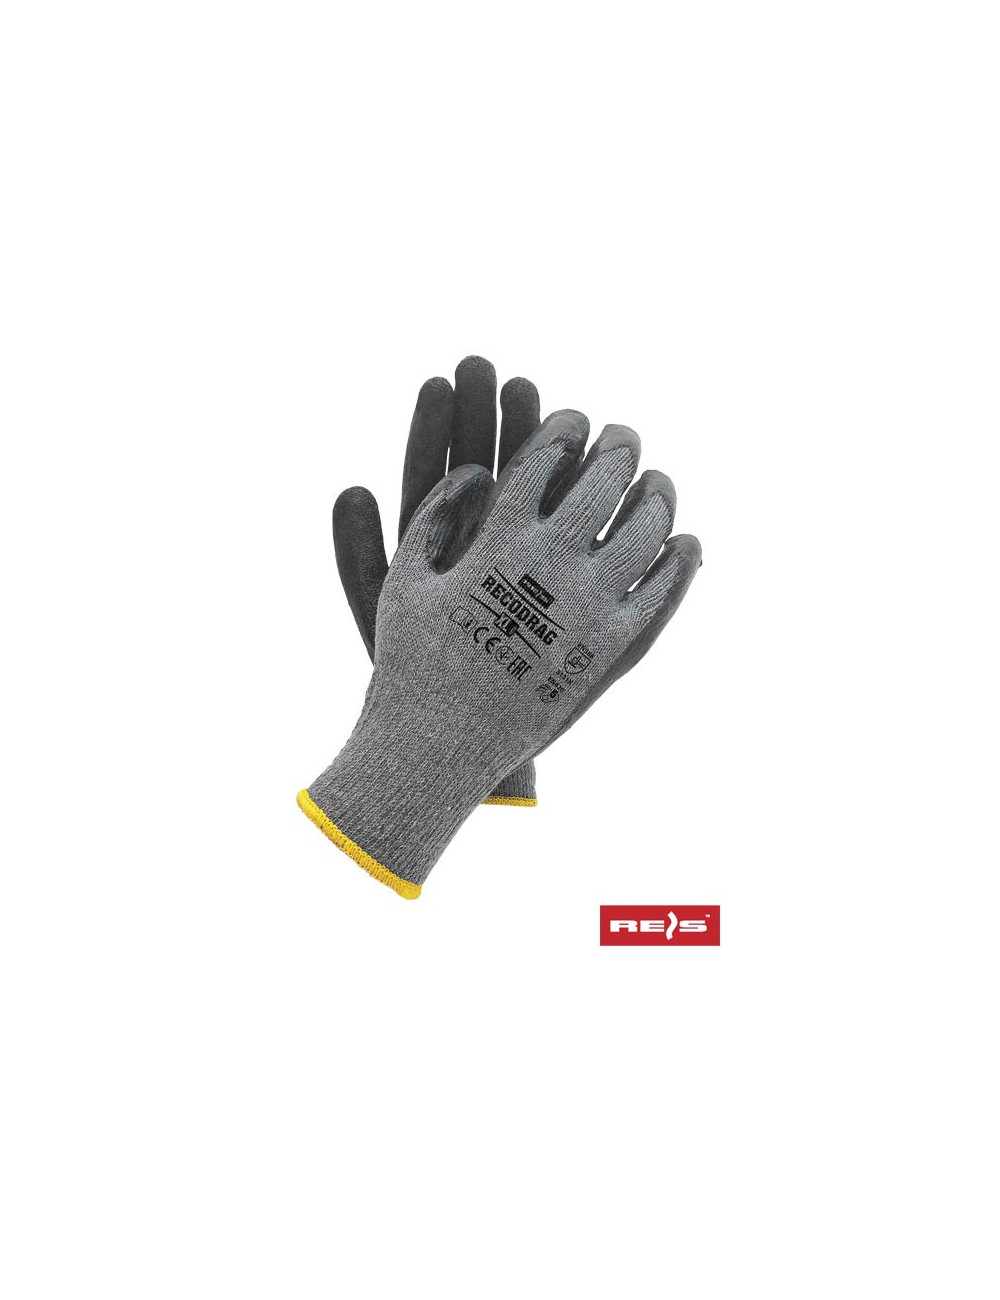 Protective gloves recodrag sb grey-black Reis